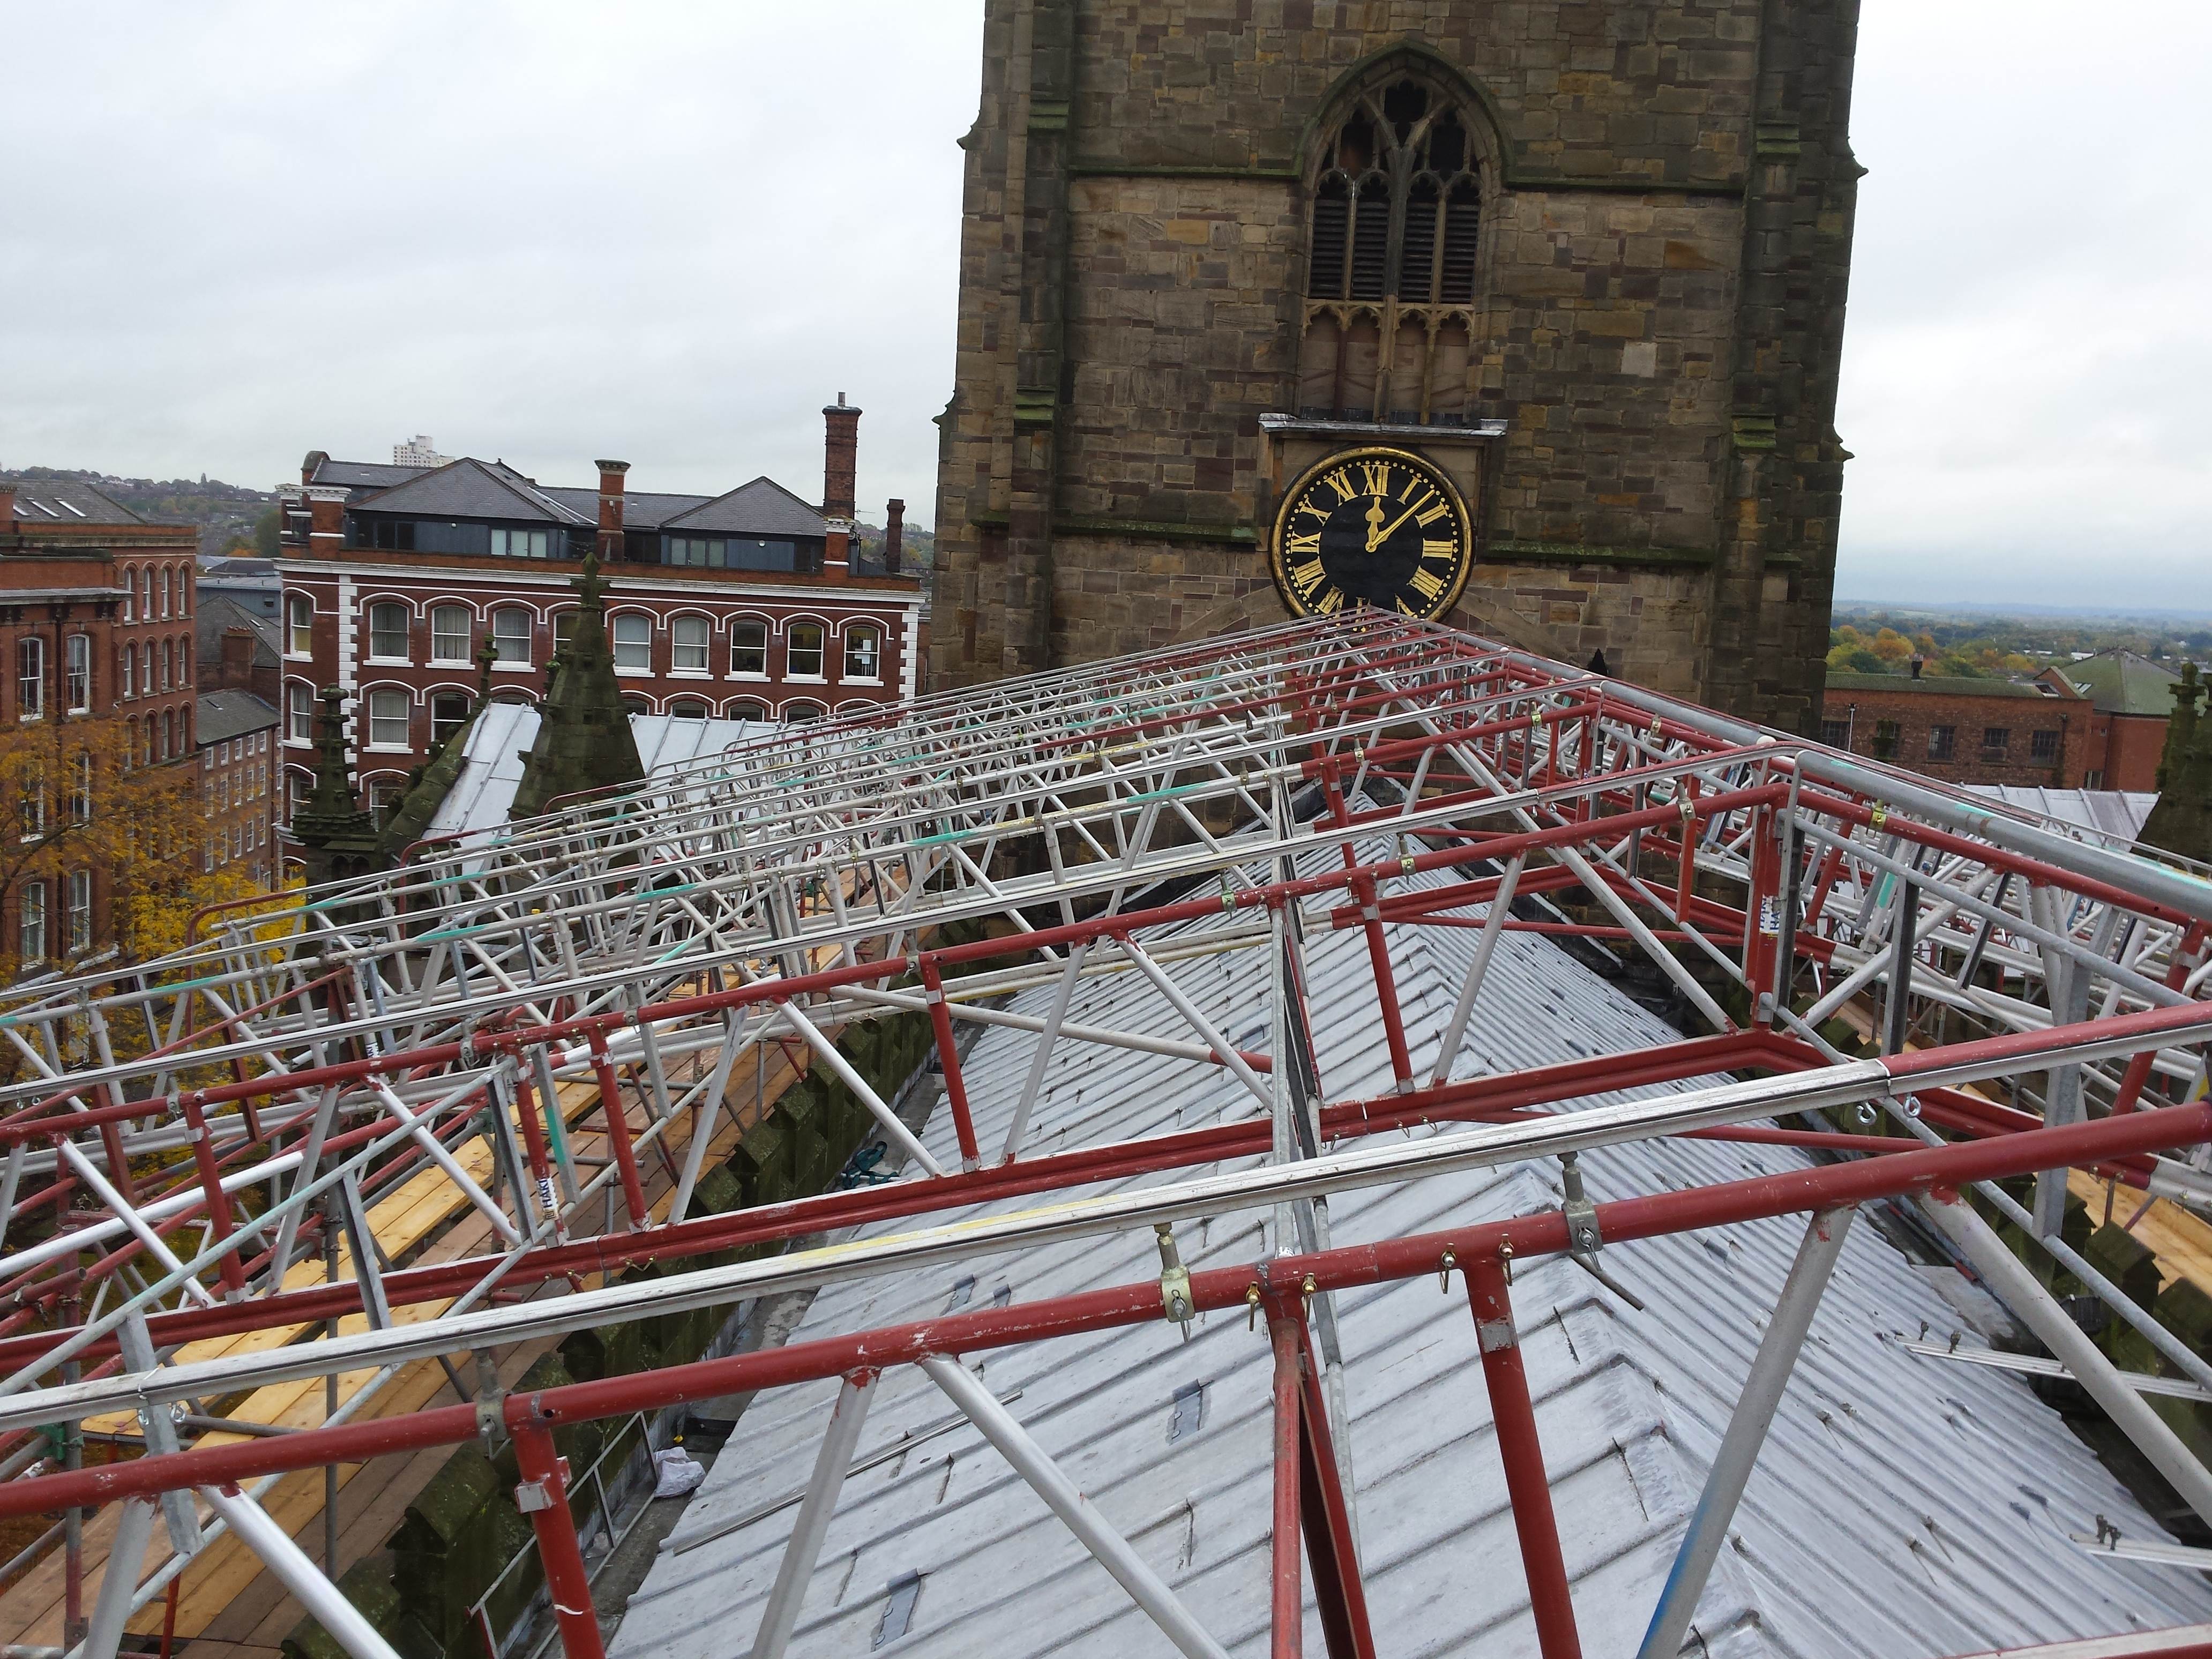 Tamworth Scaffolding: Temporary Roof Derby Cathedral - Temporary Roofs Temporary Roof Derby Cathedral
